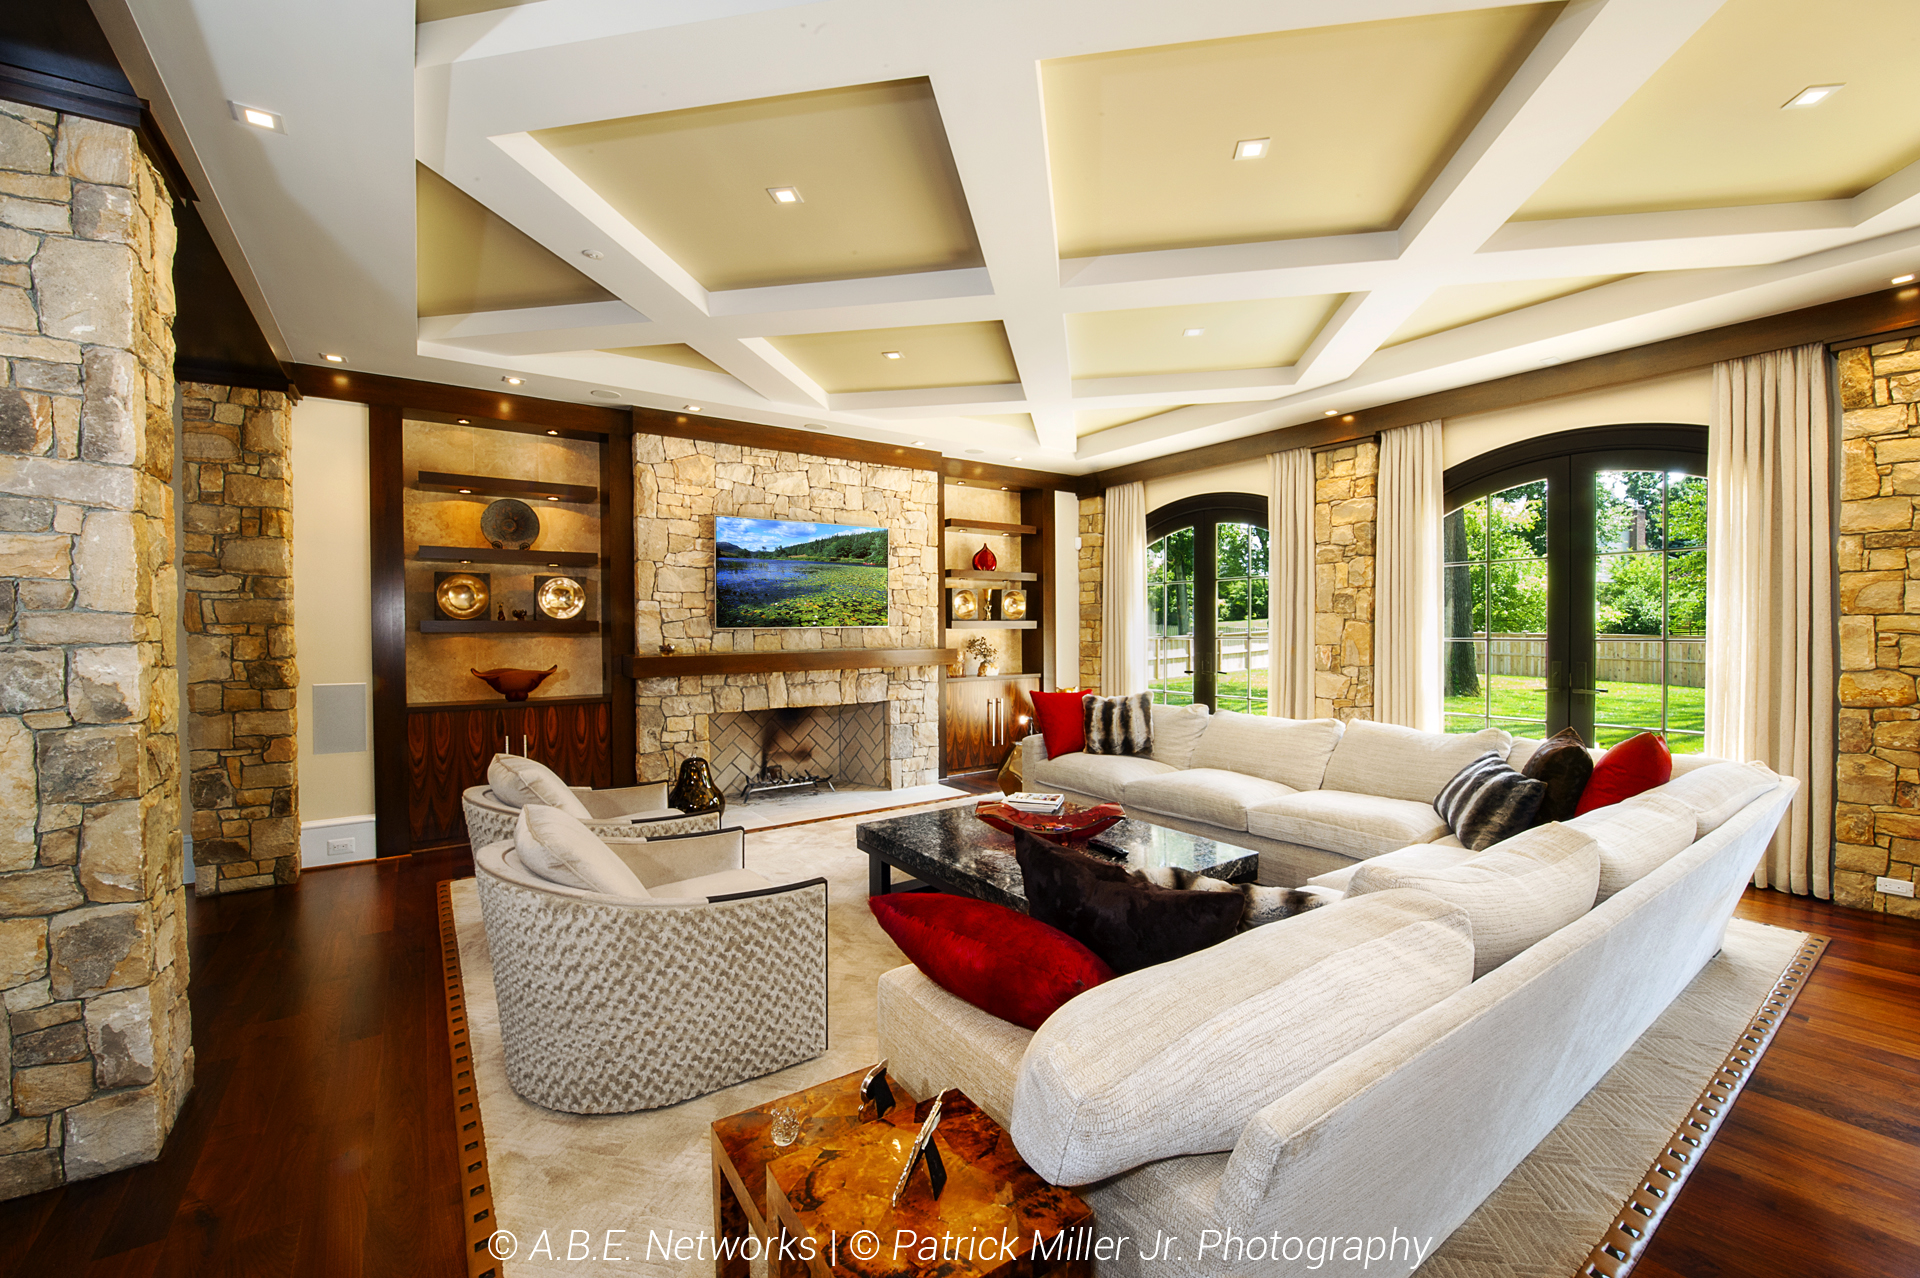 Living Room with Mounted Samsung HDTV and Lutron Lighting